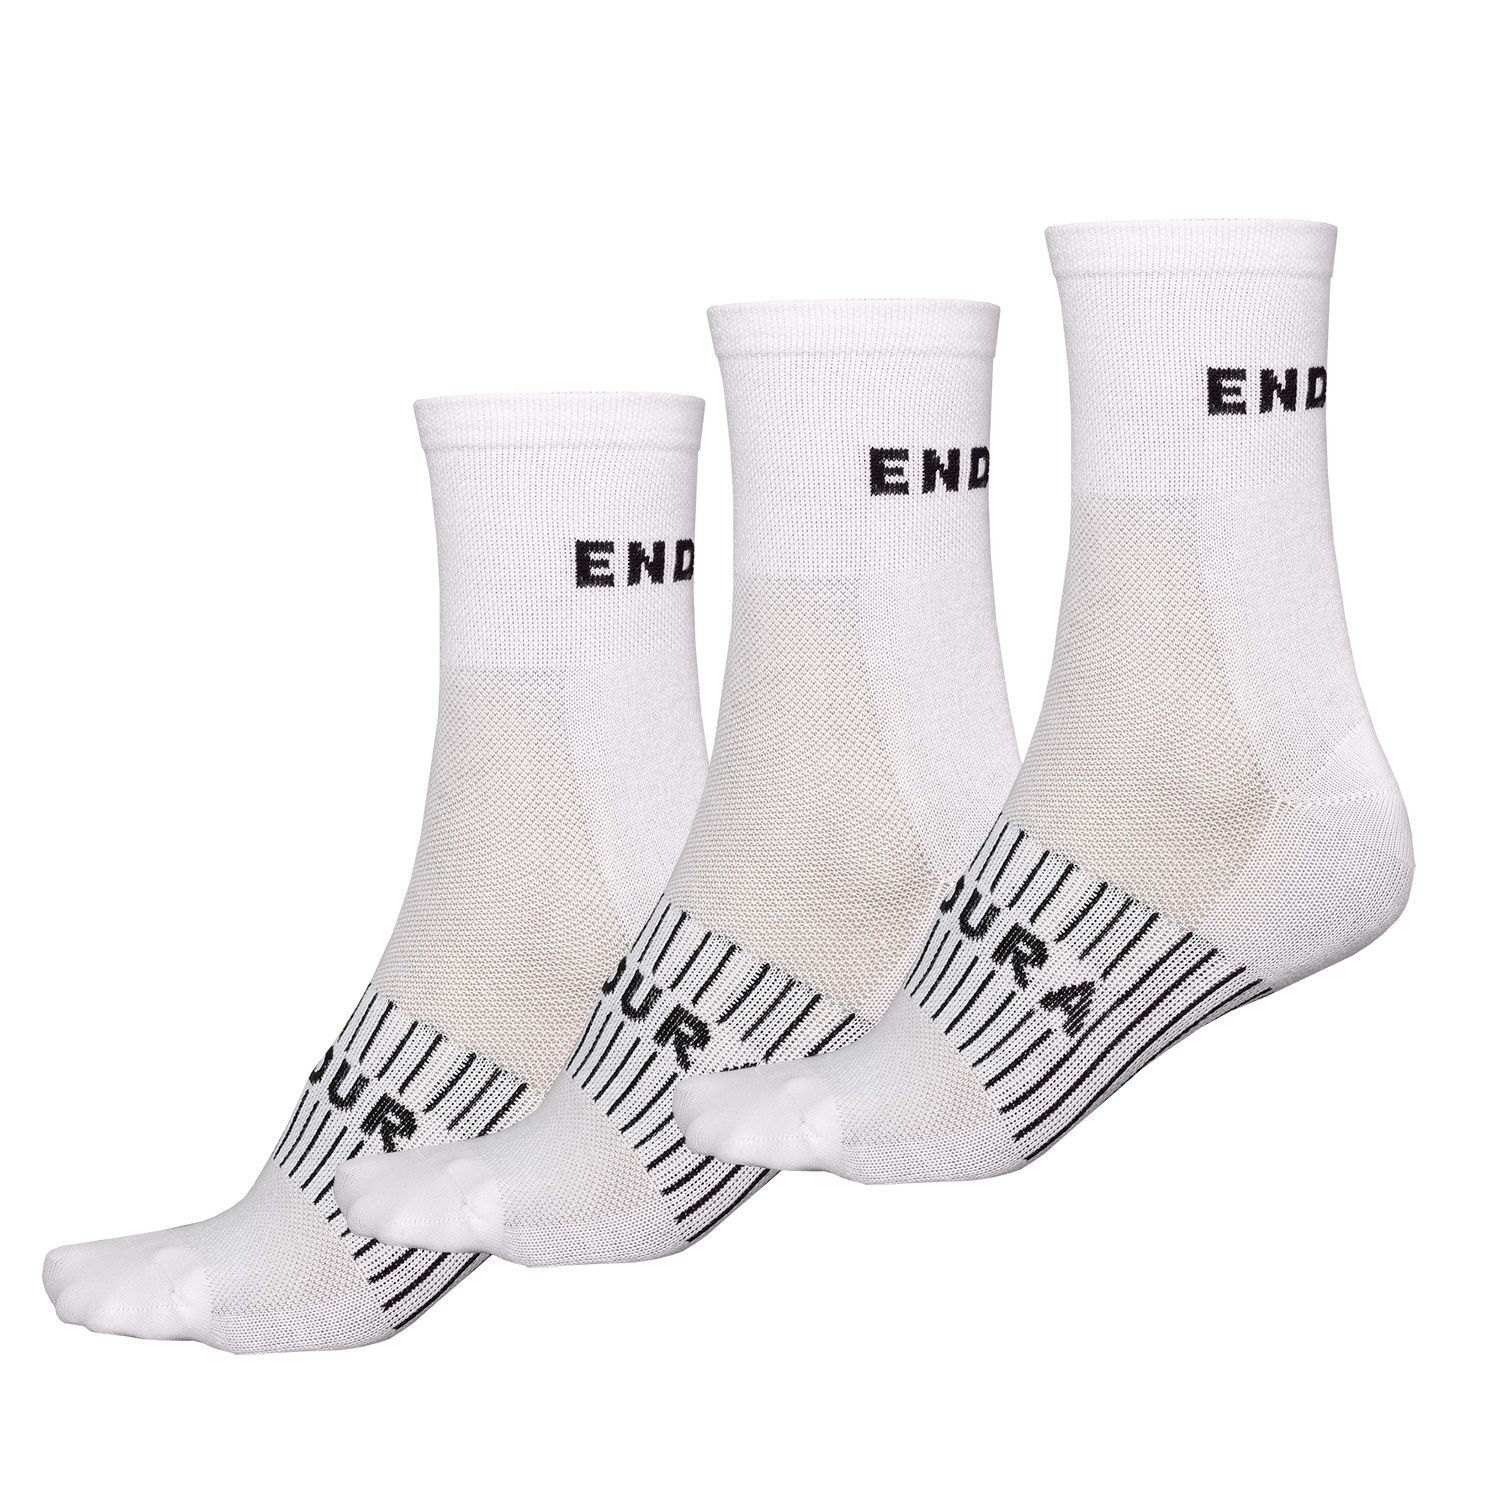 Endura Coolmax Race Sock (Triple Pack) - Cycling socks - Men's